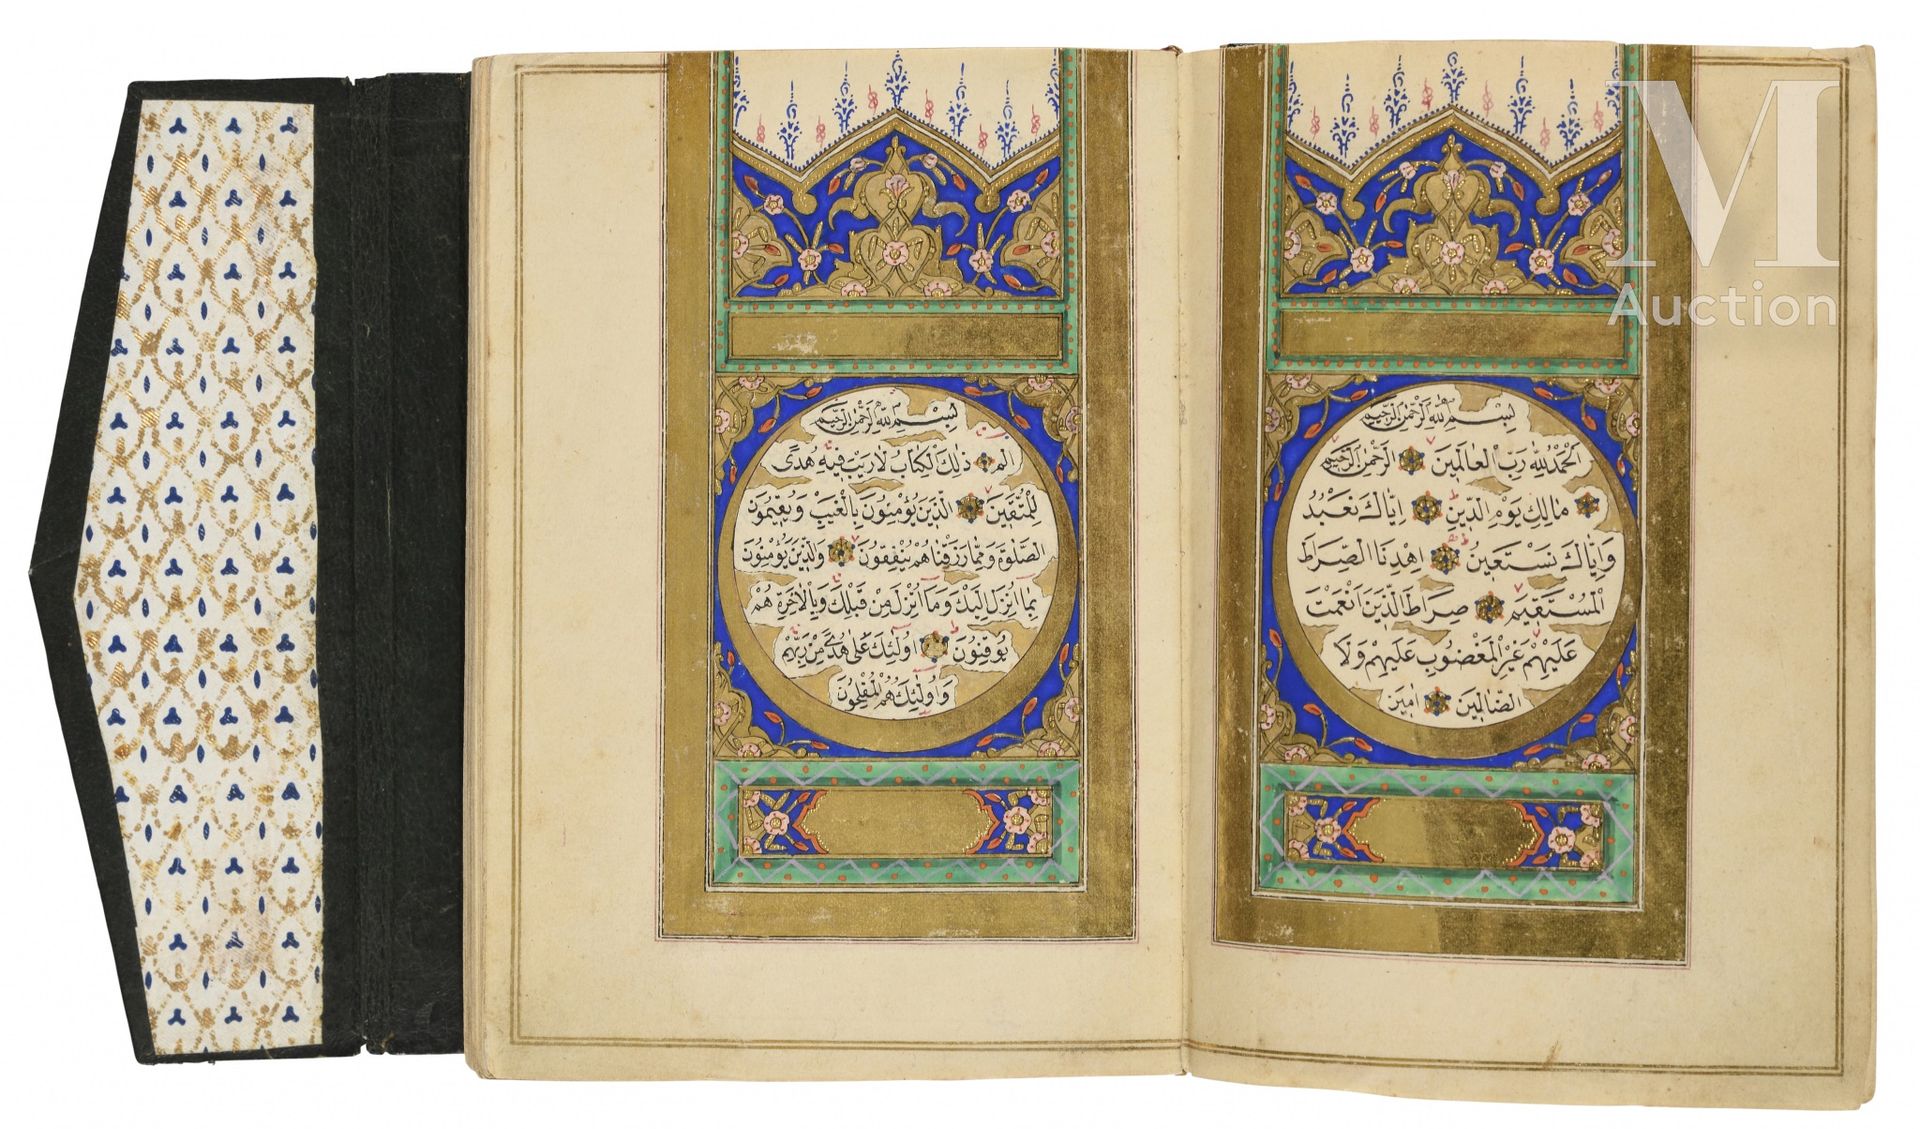 Coran d'époque ottomane By 'Ali Al-Khulusi

Turkey, dated 1279H. ('''=1862) 

Ar&hellip;